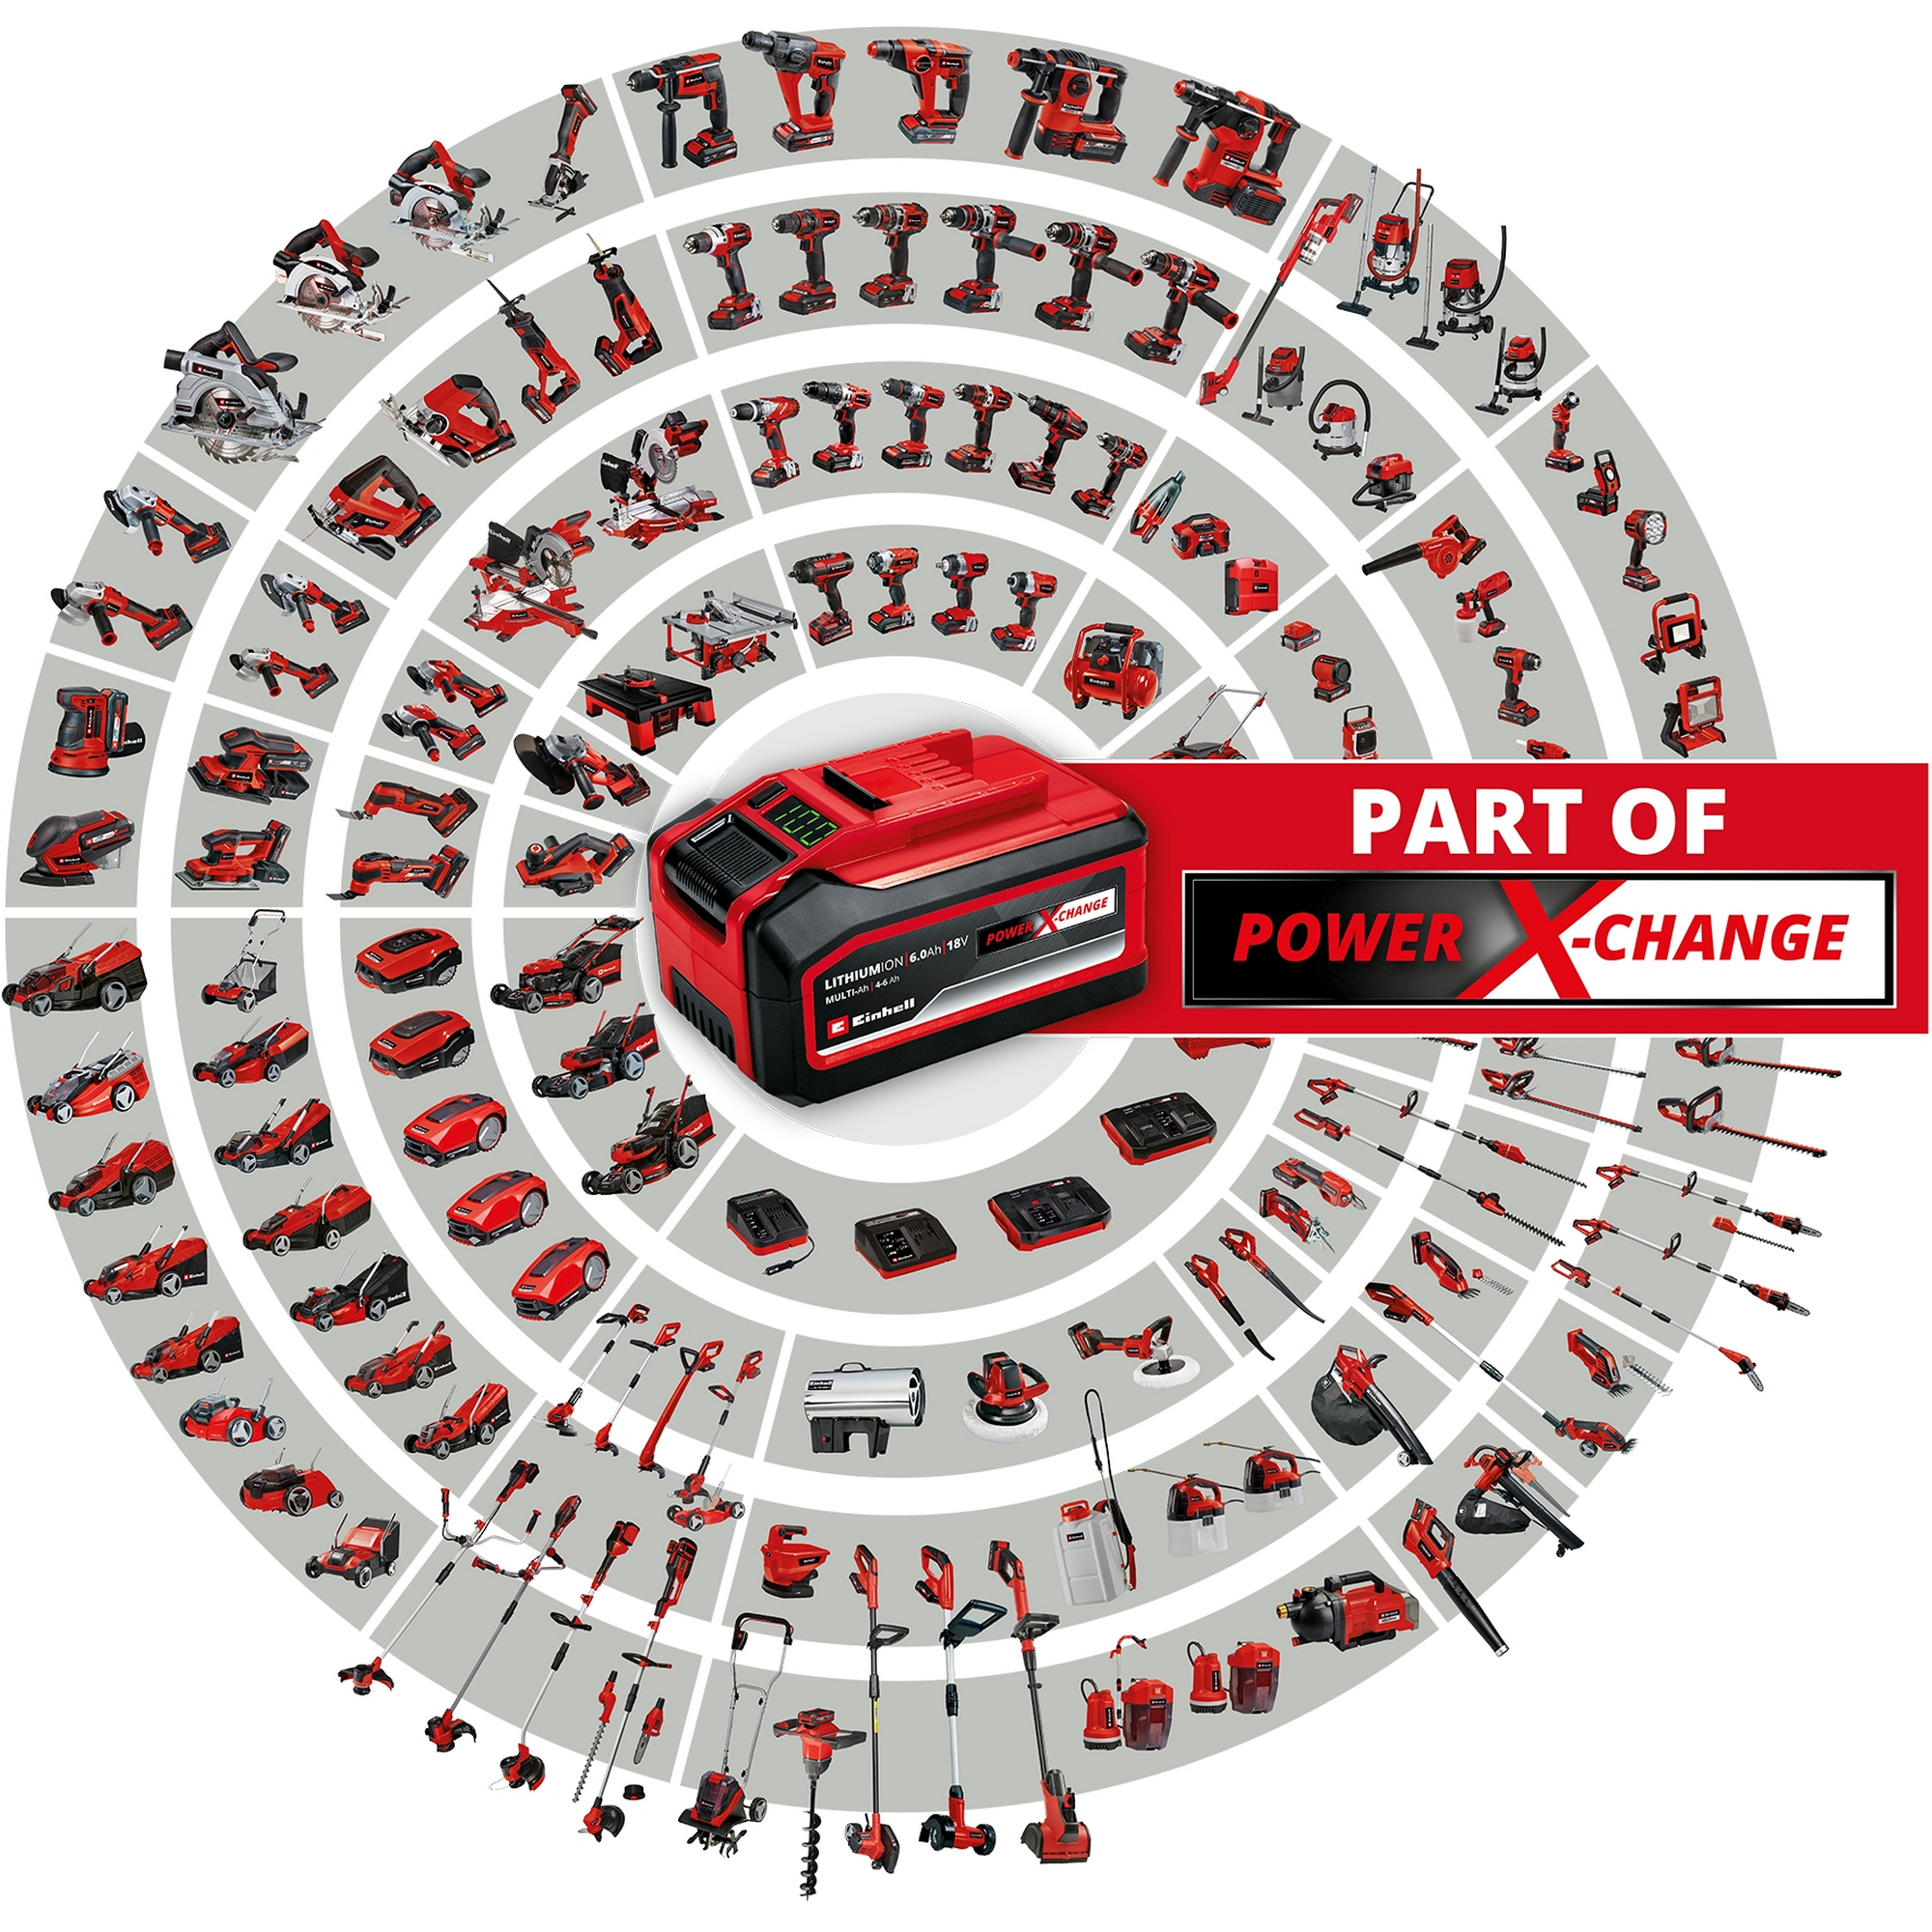 Akku-Grasschere 'Power X-Change' 18 V ohne Akku + product picture